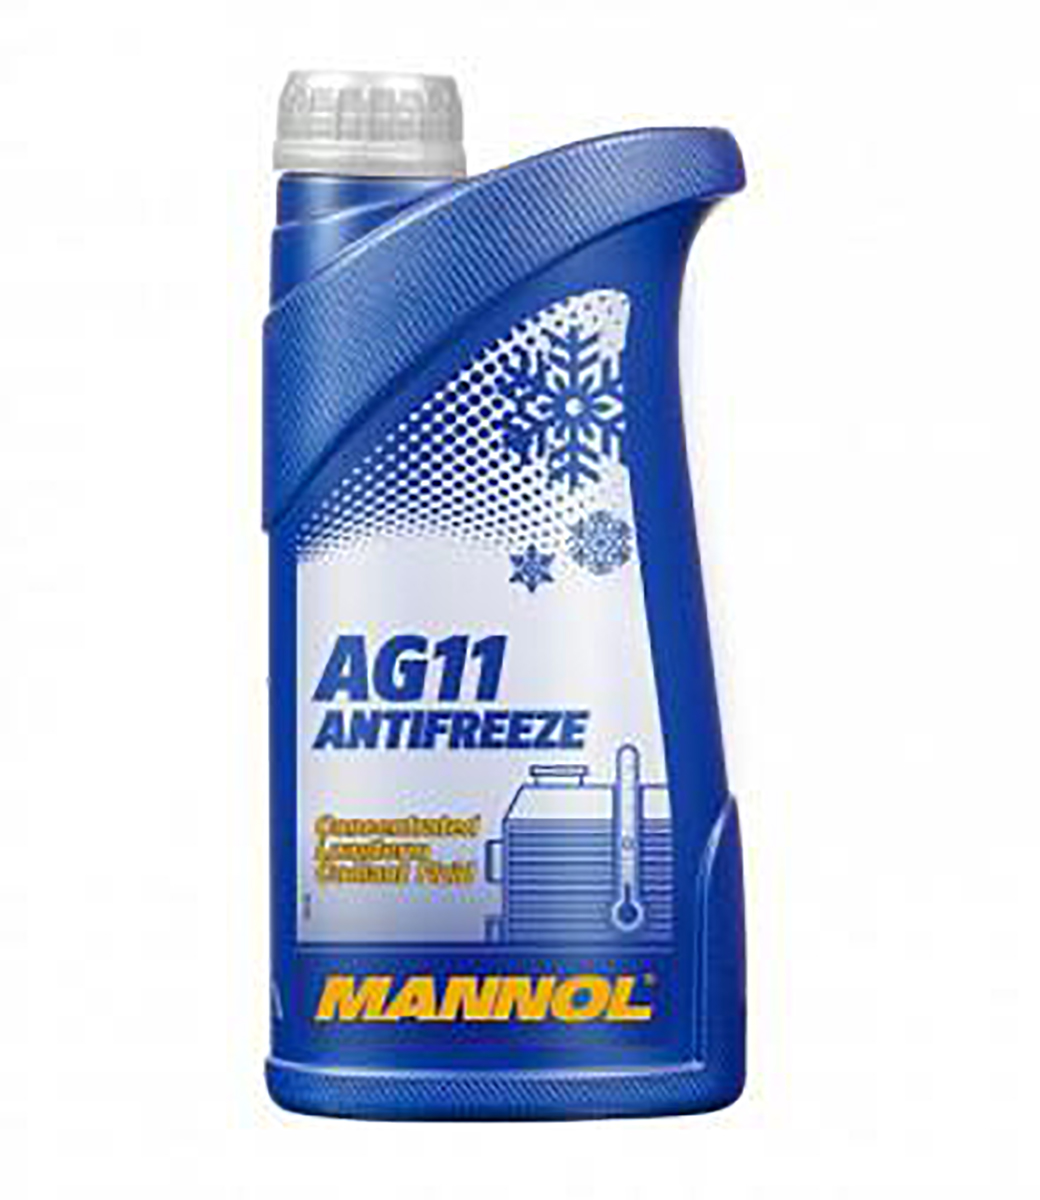 Antifreeze AG11 Longterm